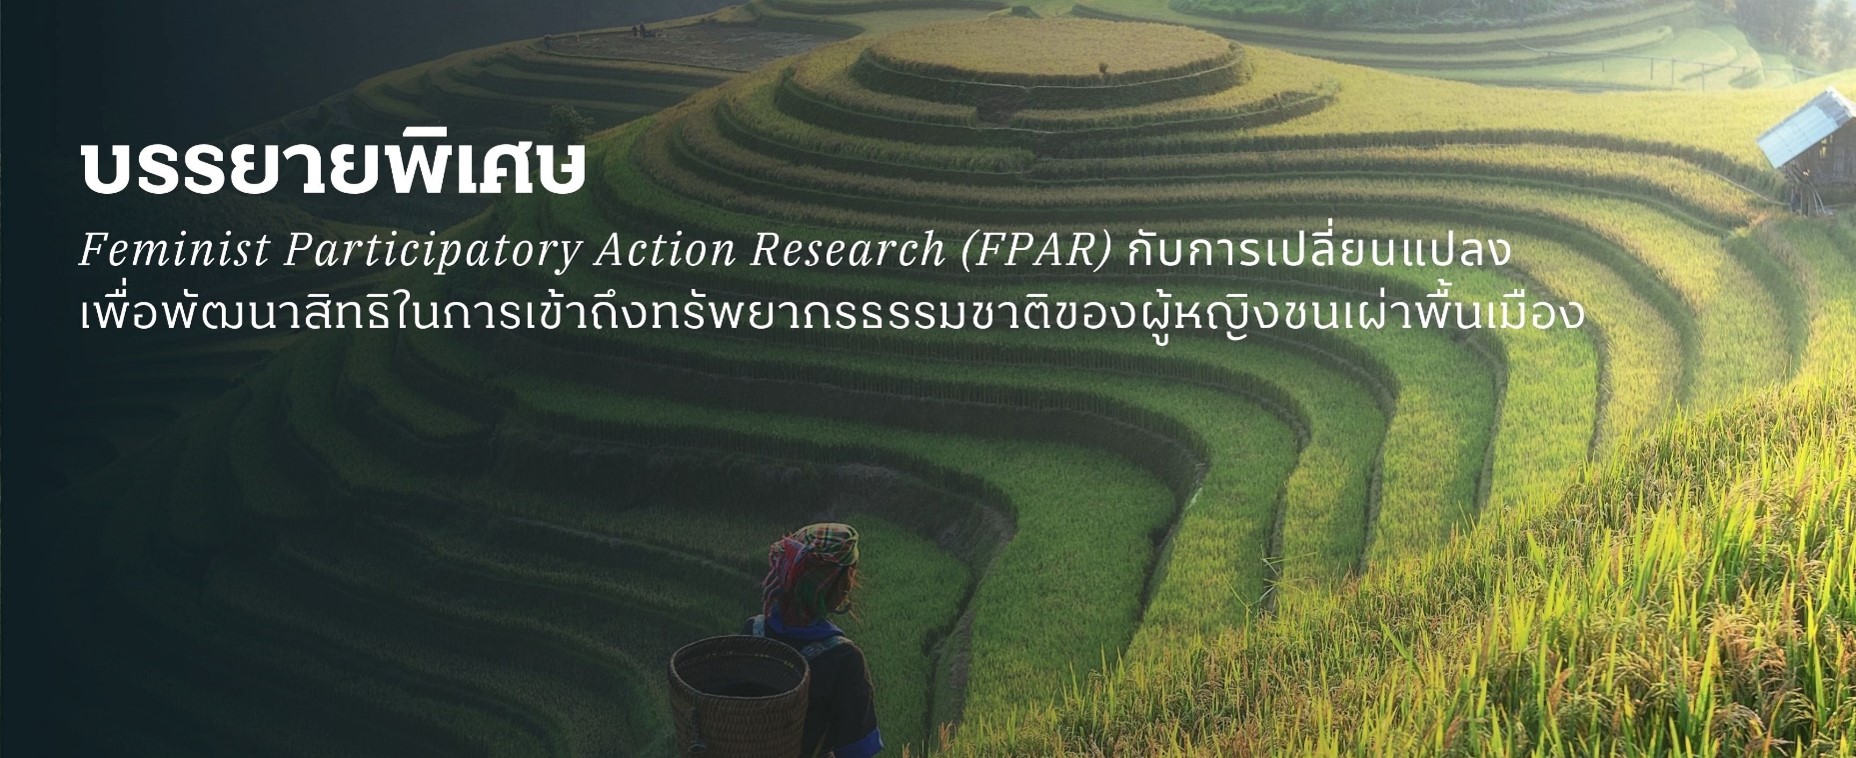 Feminist Participatory Action Research (FPAR)